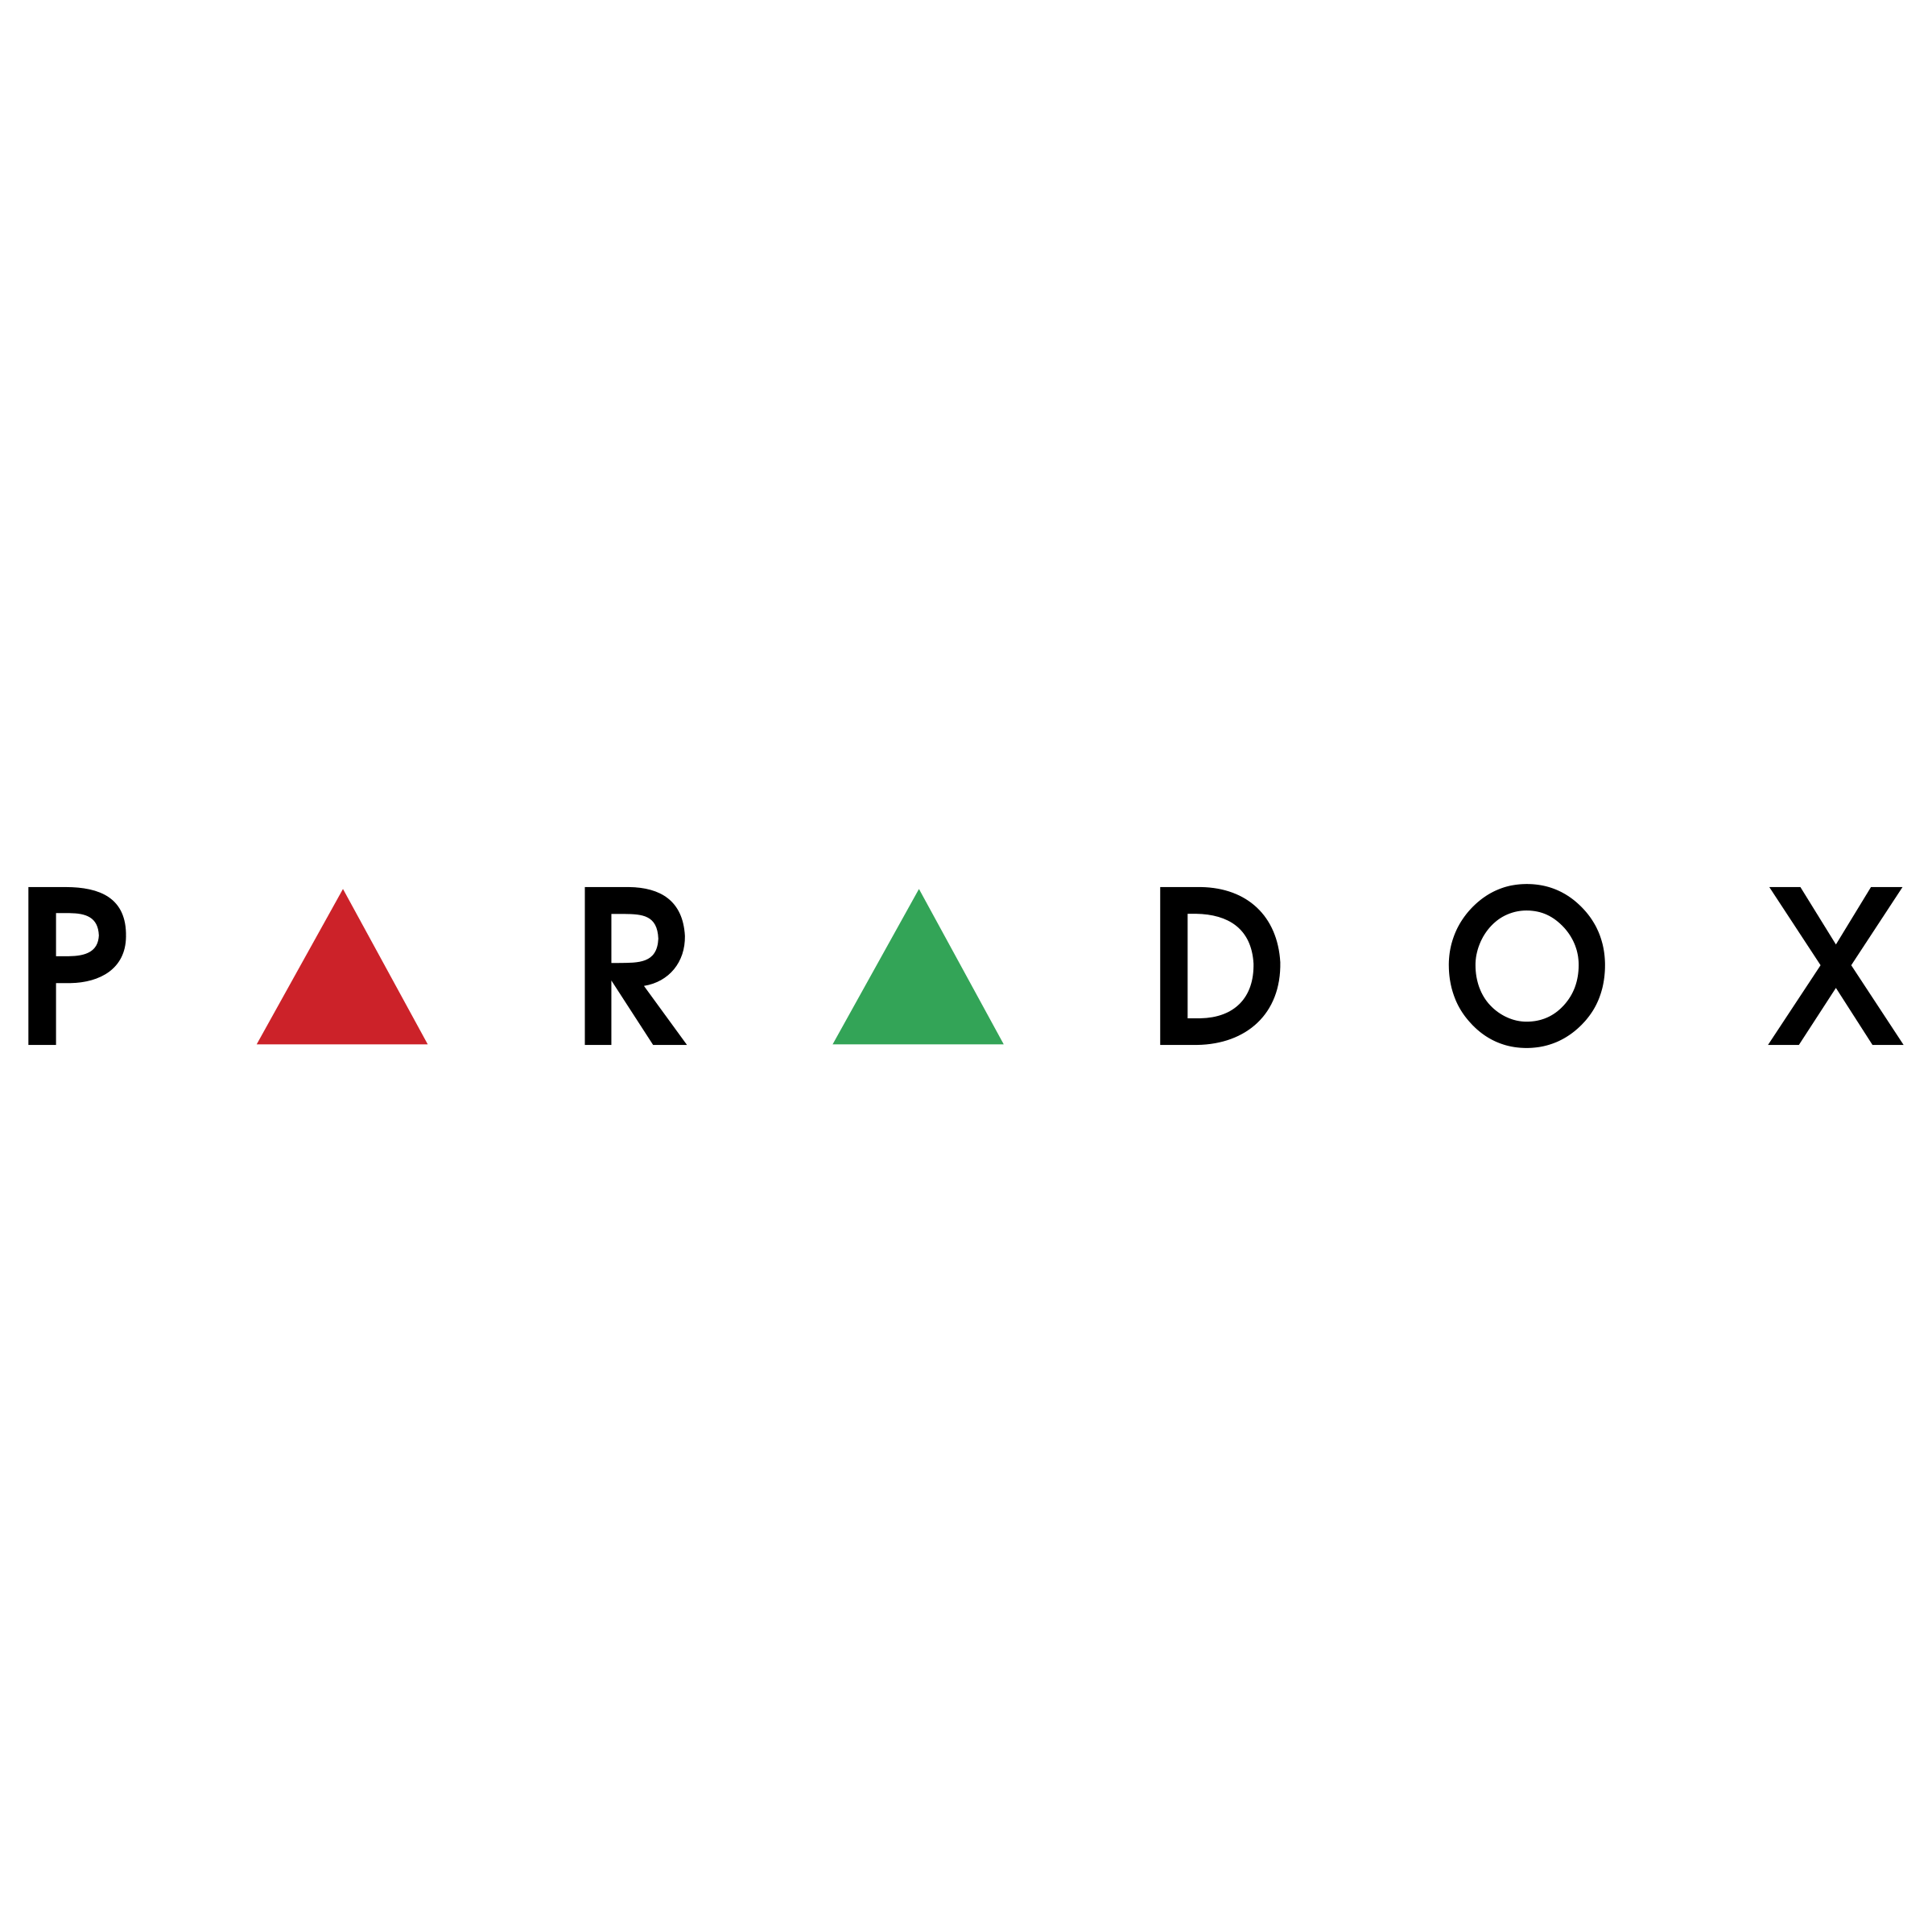 Paradox Logo - Paradox Logo PNG Transparent & SVG Vector - Freebie Supply